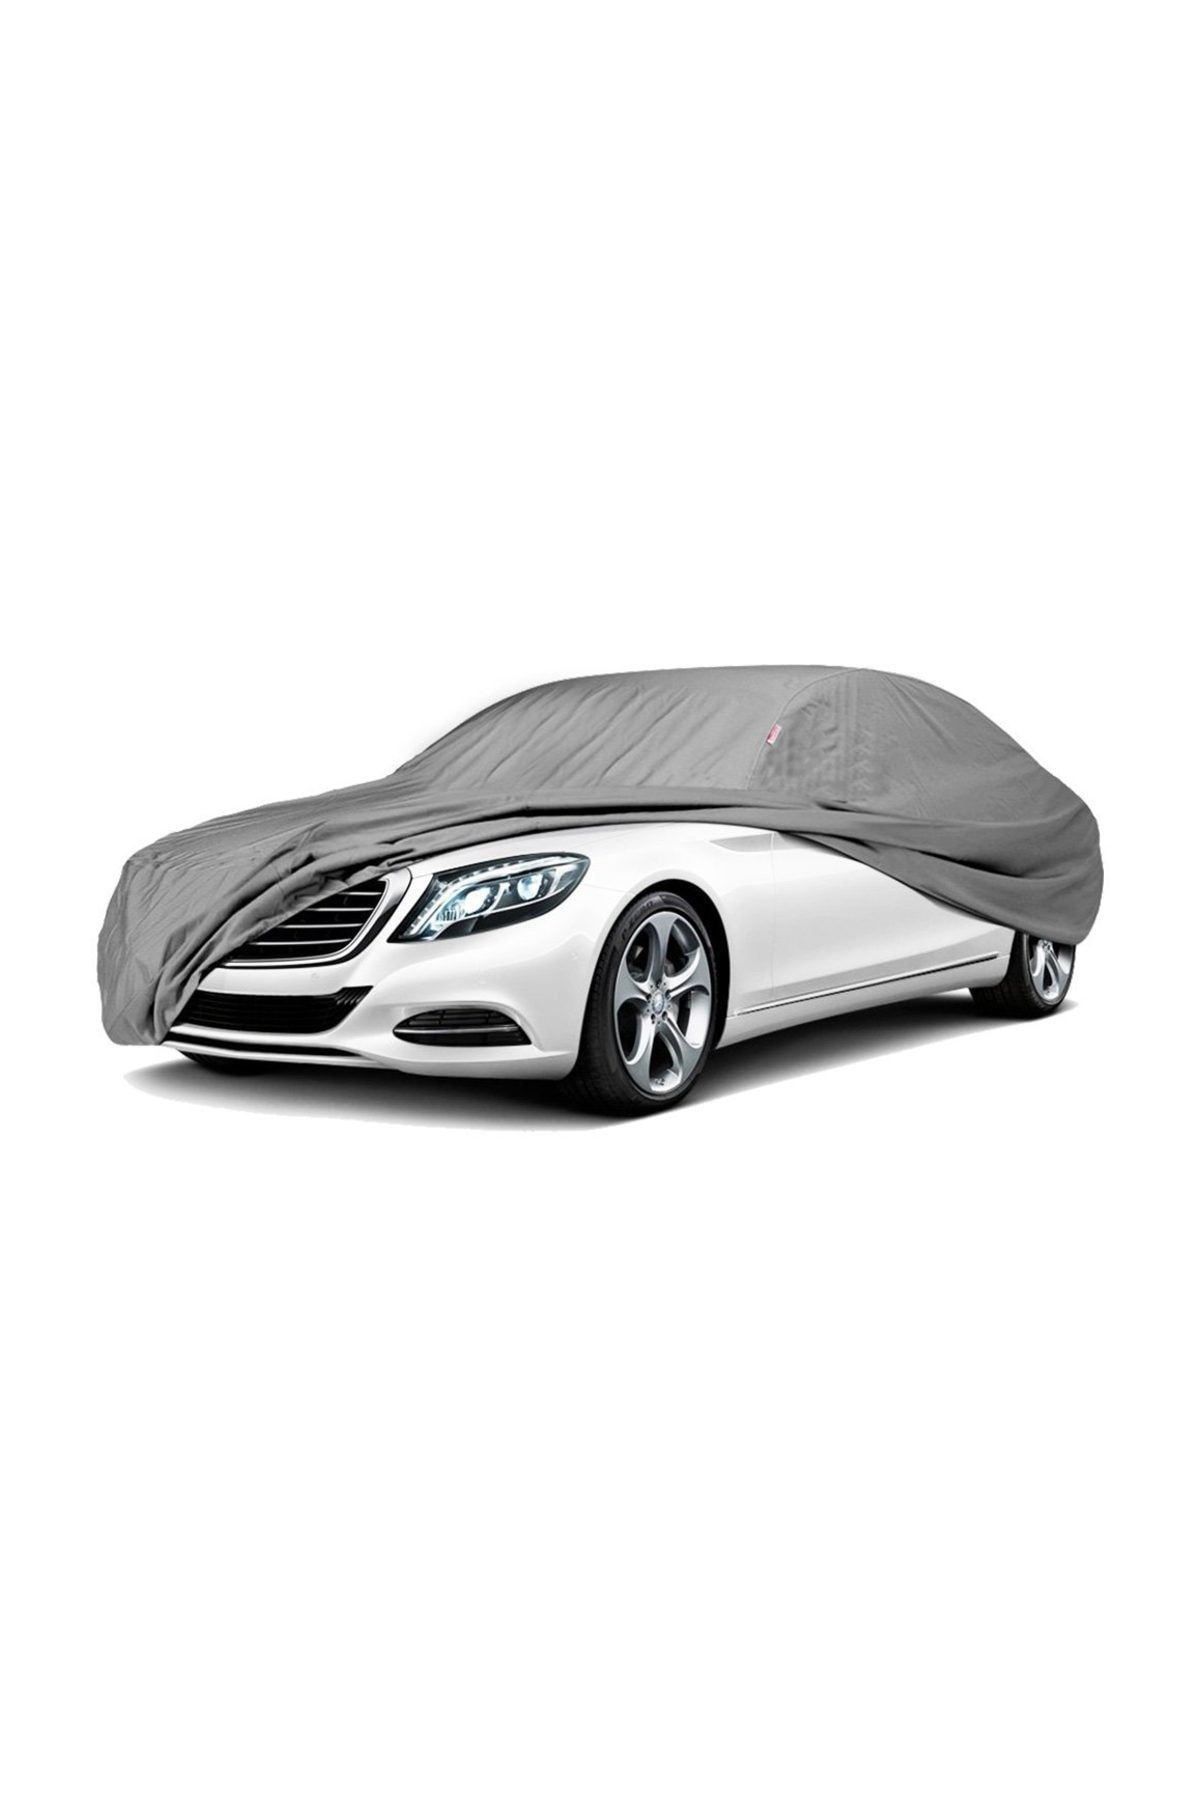 AutoEN VİNLEKS Opel Mokka Auto Cover Car Tent Luxury Ultra Quality